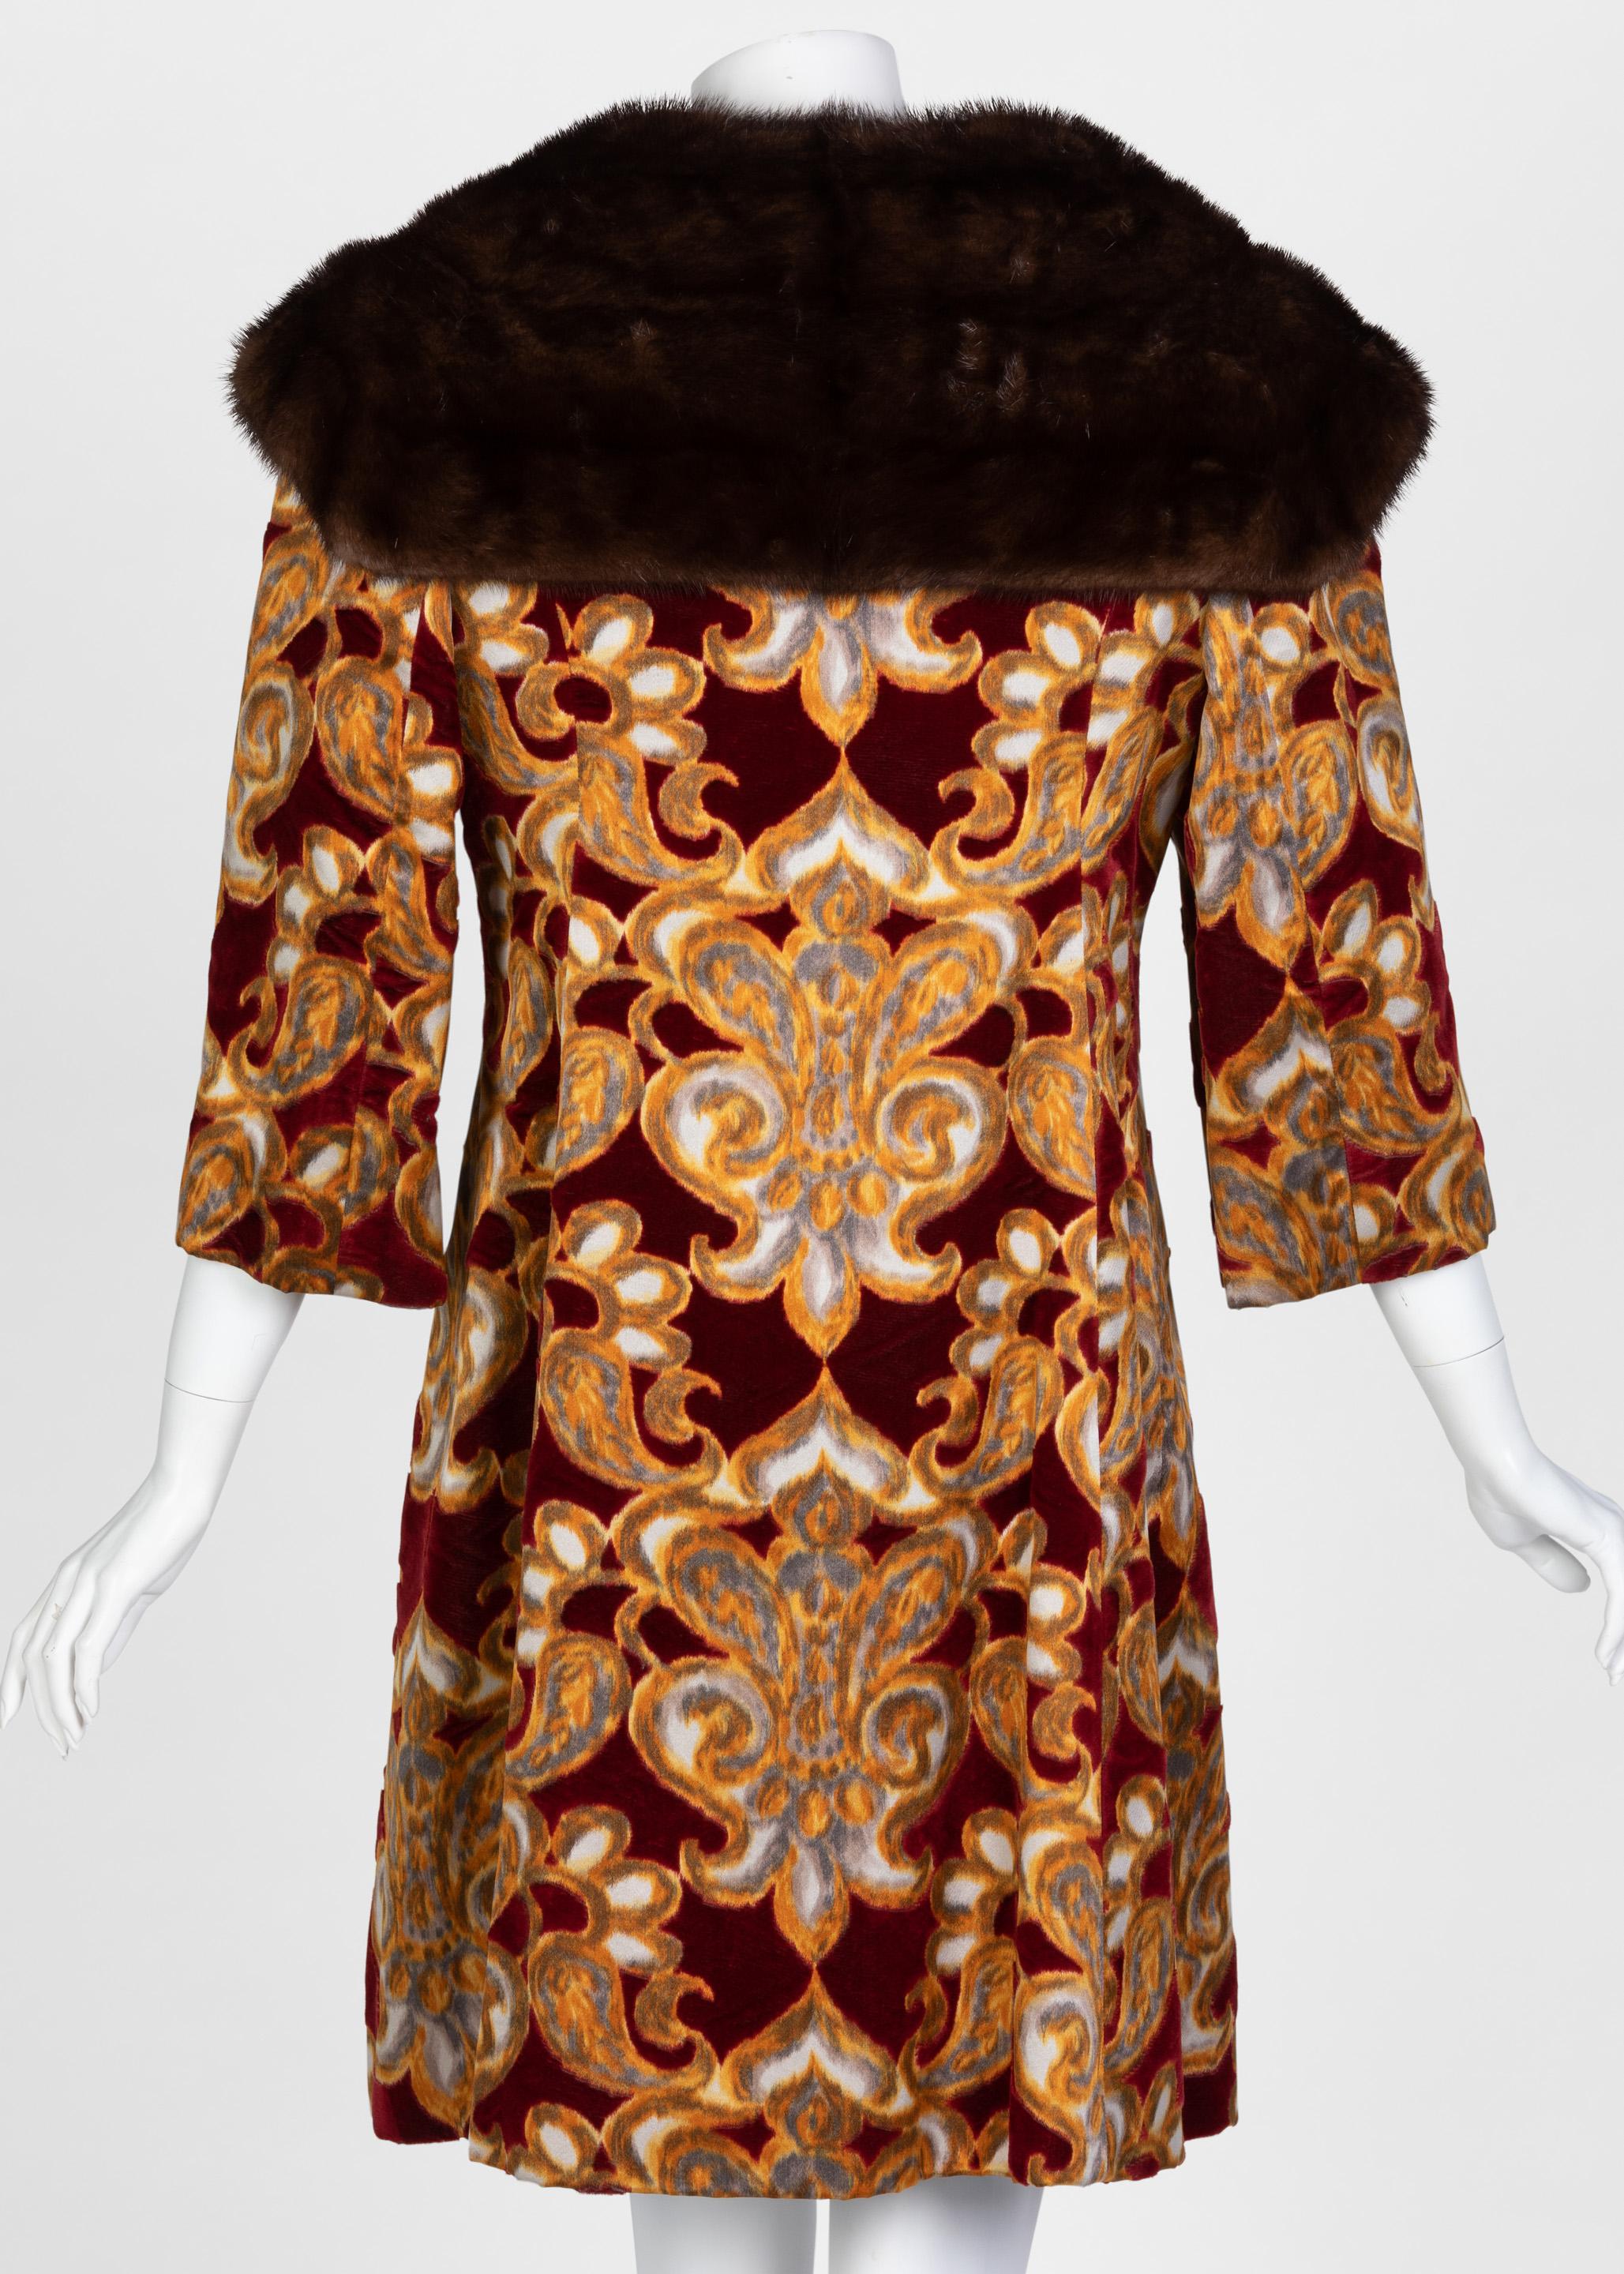 Galanos Couture Red Gold Velvet Fur Trimmed Coat & Dress Ensemble, 1982 For Sale 3